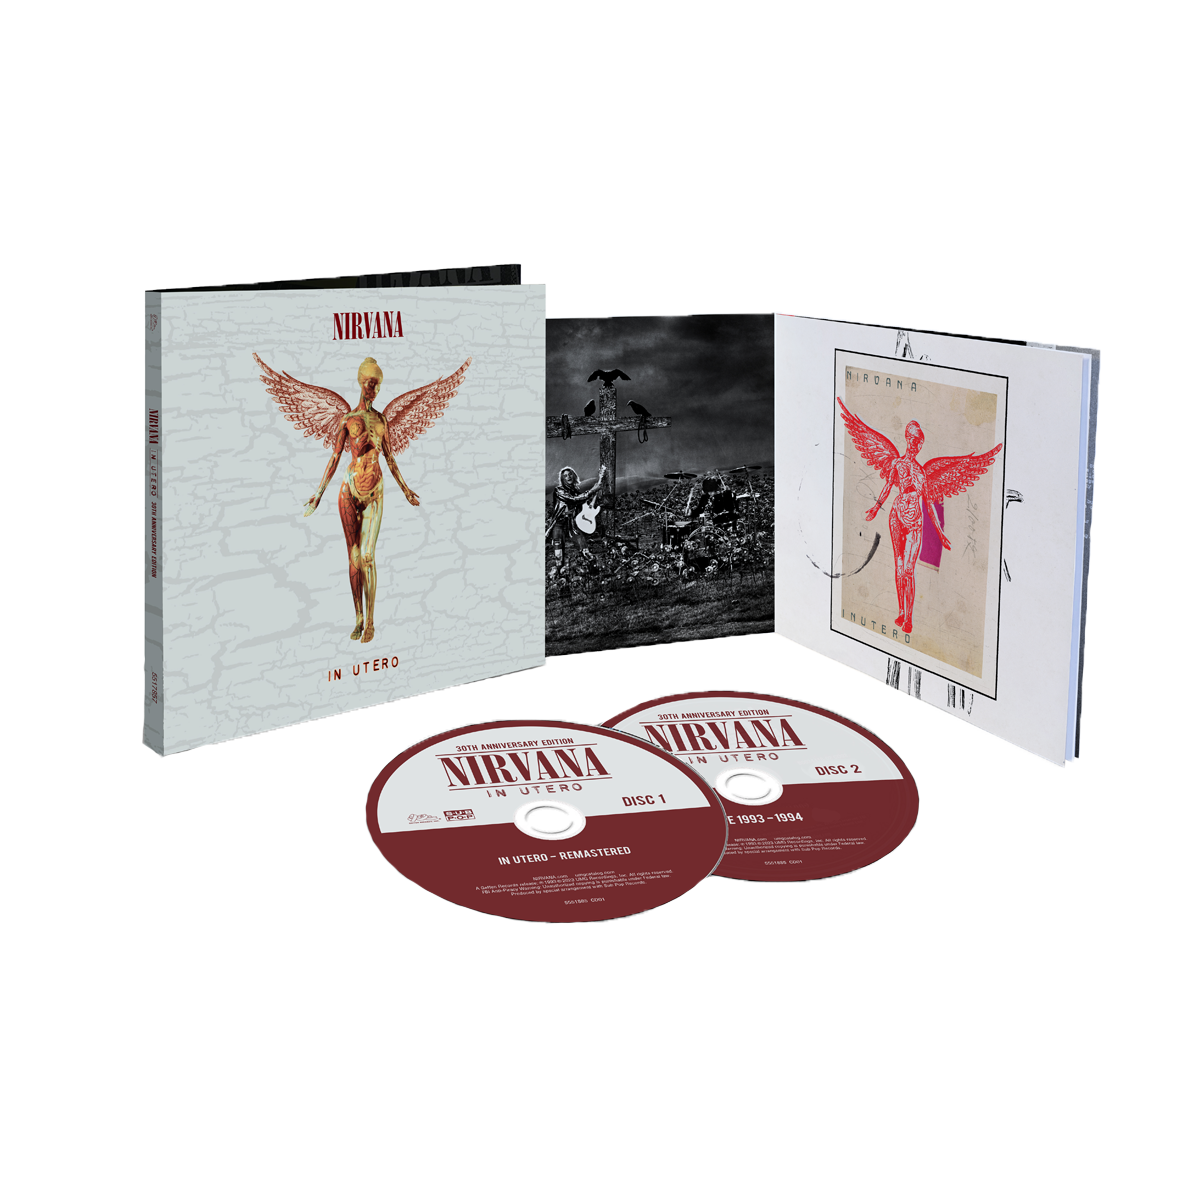 Nirvana Nevermind and Incesticide - Nirvana 2 CD Album Bundling